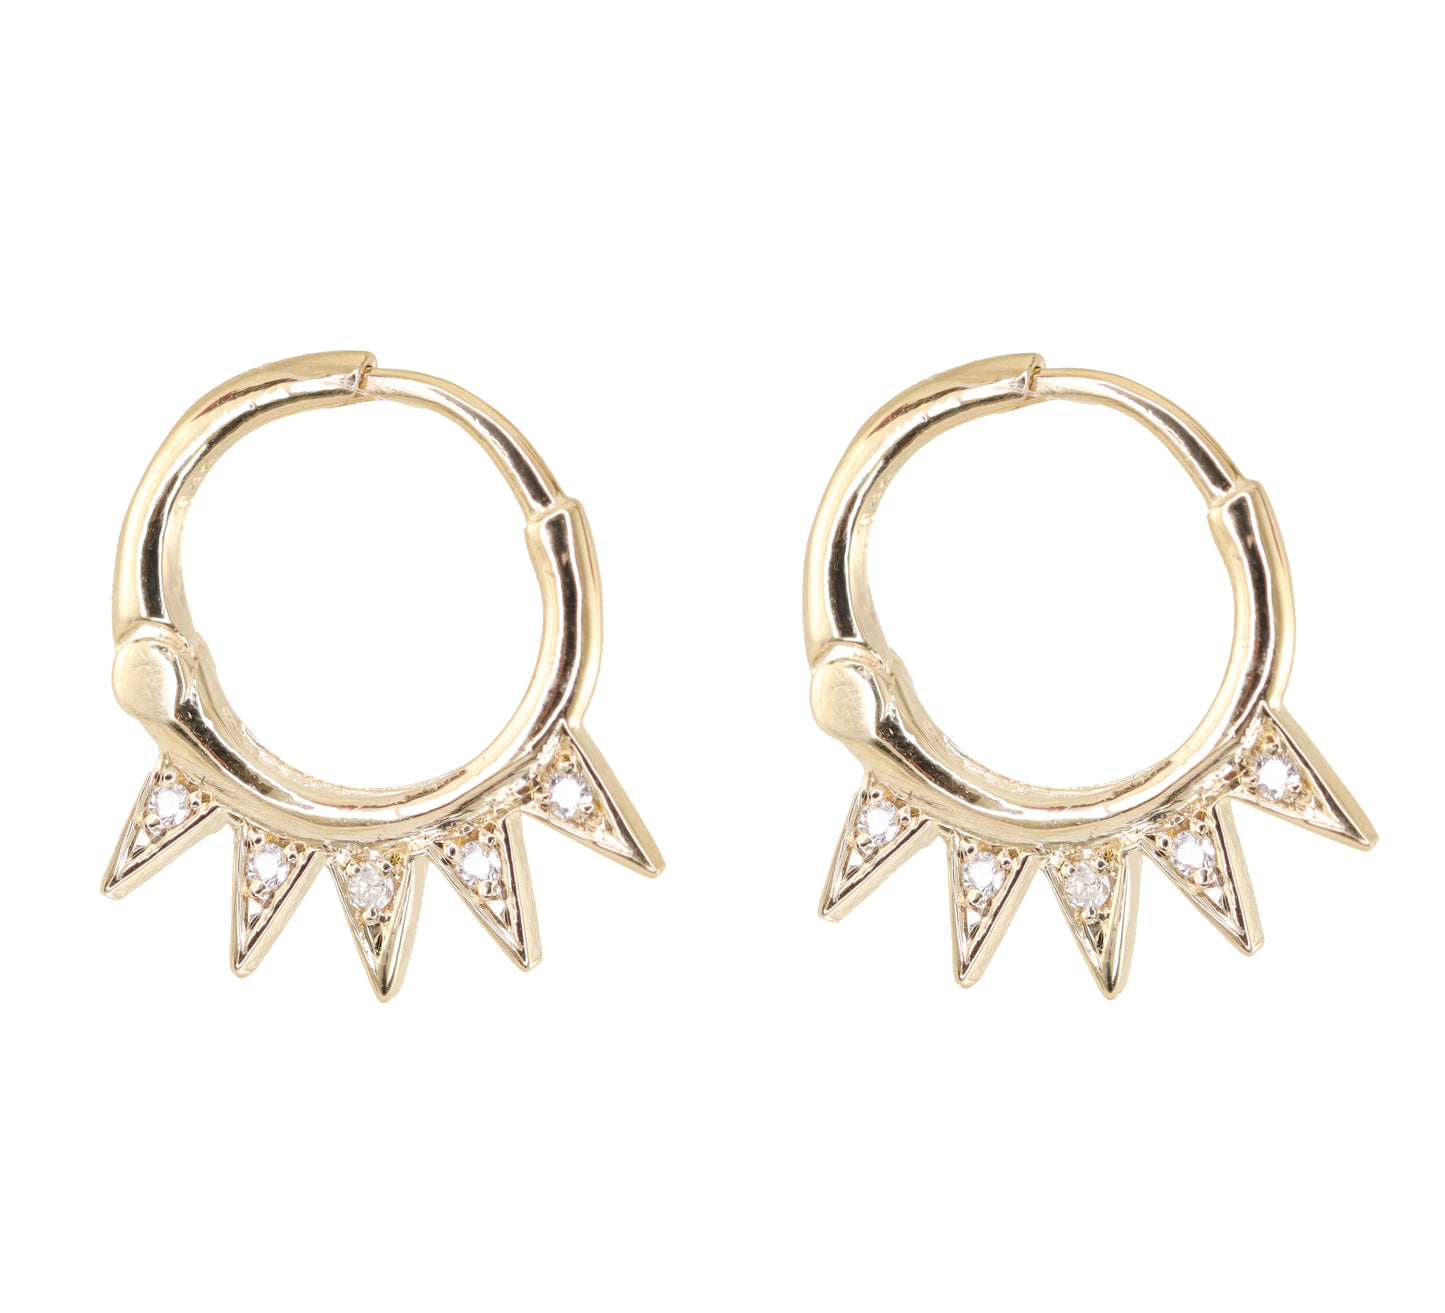 14kt gold and diamond spike hoop earrings